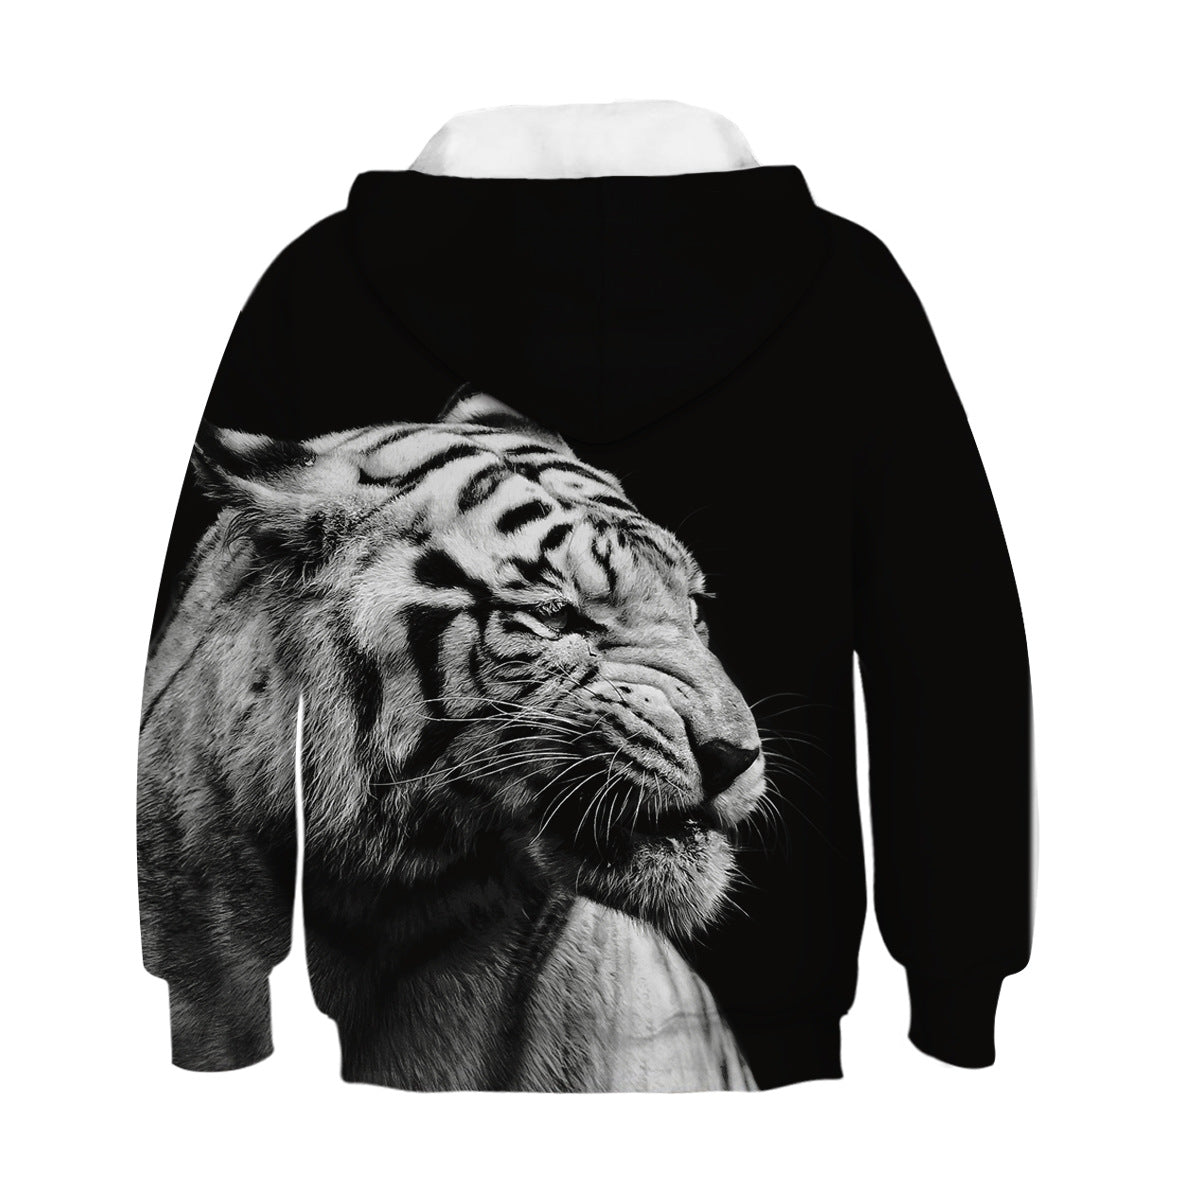 aminibi- Unisex Realistic 3D White Tiger Print Pullover Hoodie Kids Hooded Sweatshirt